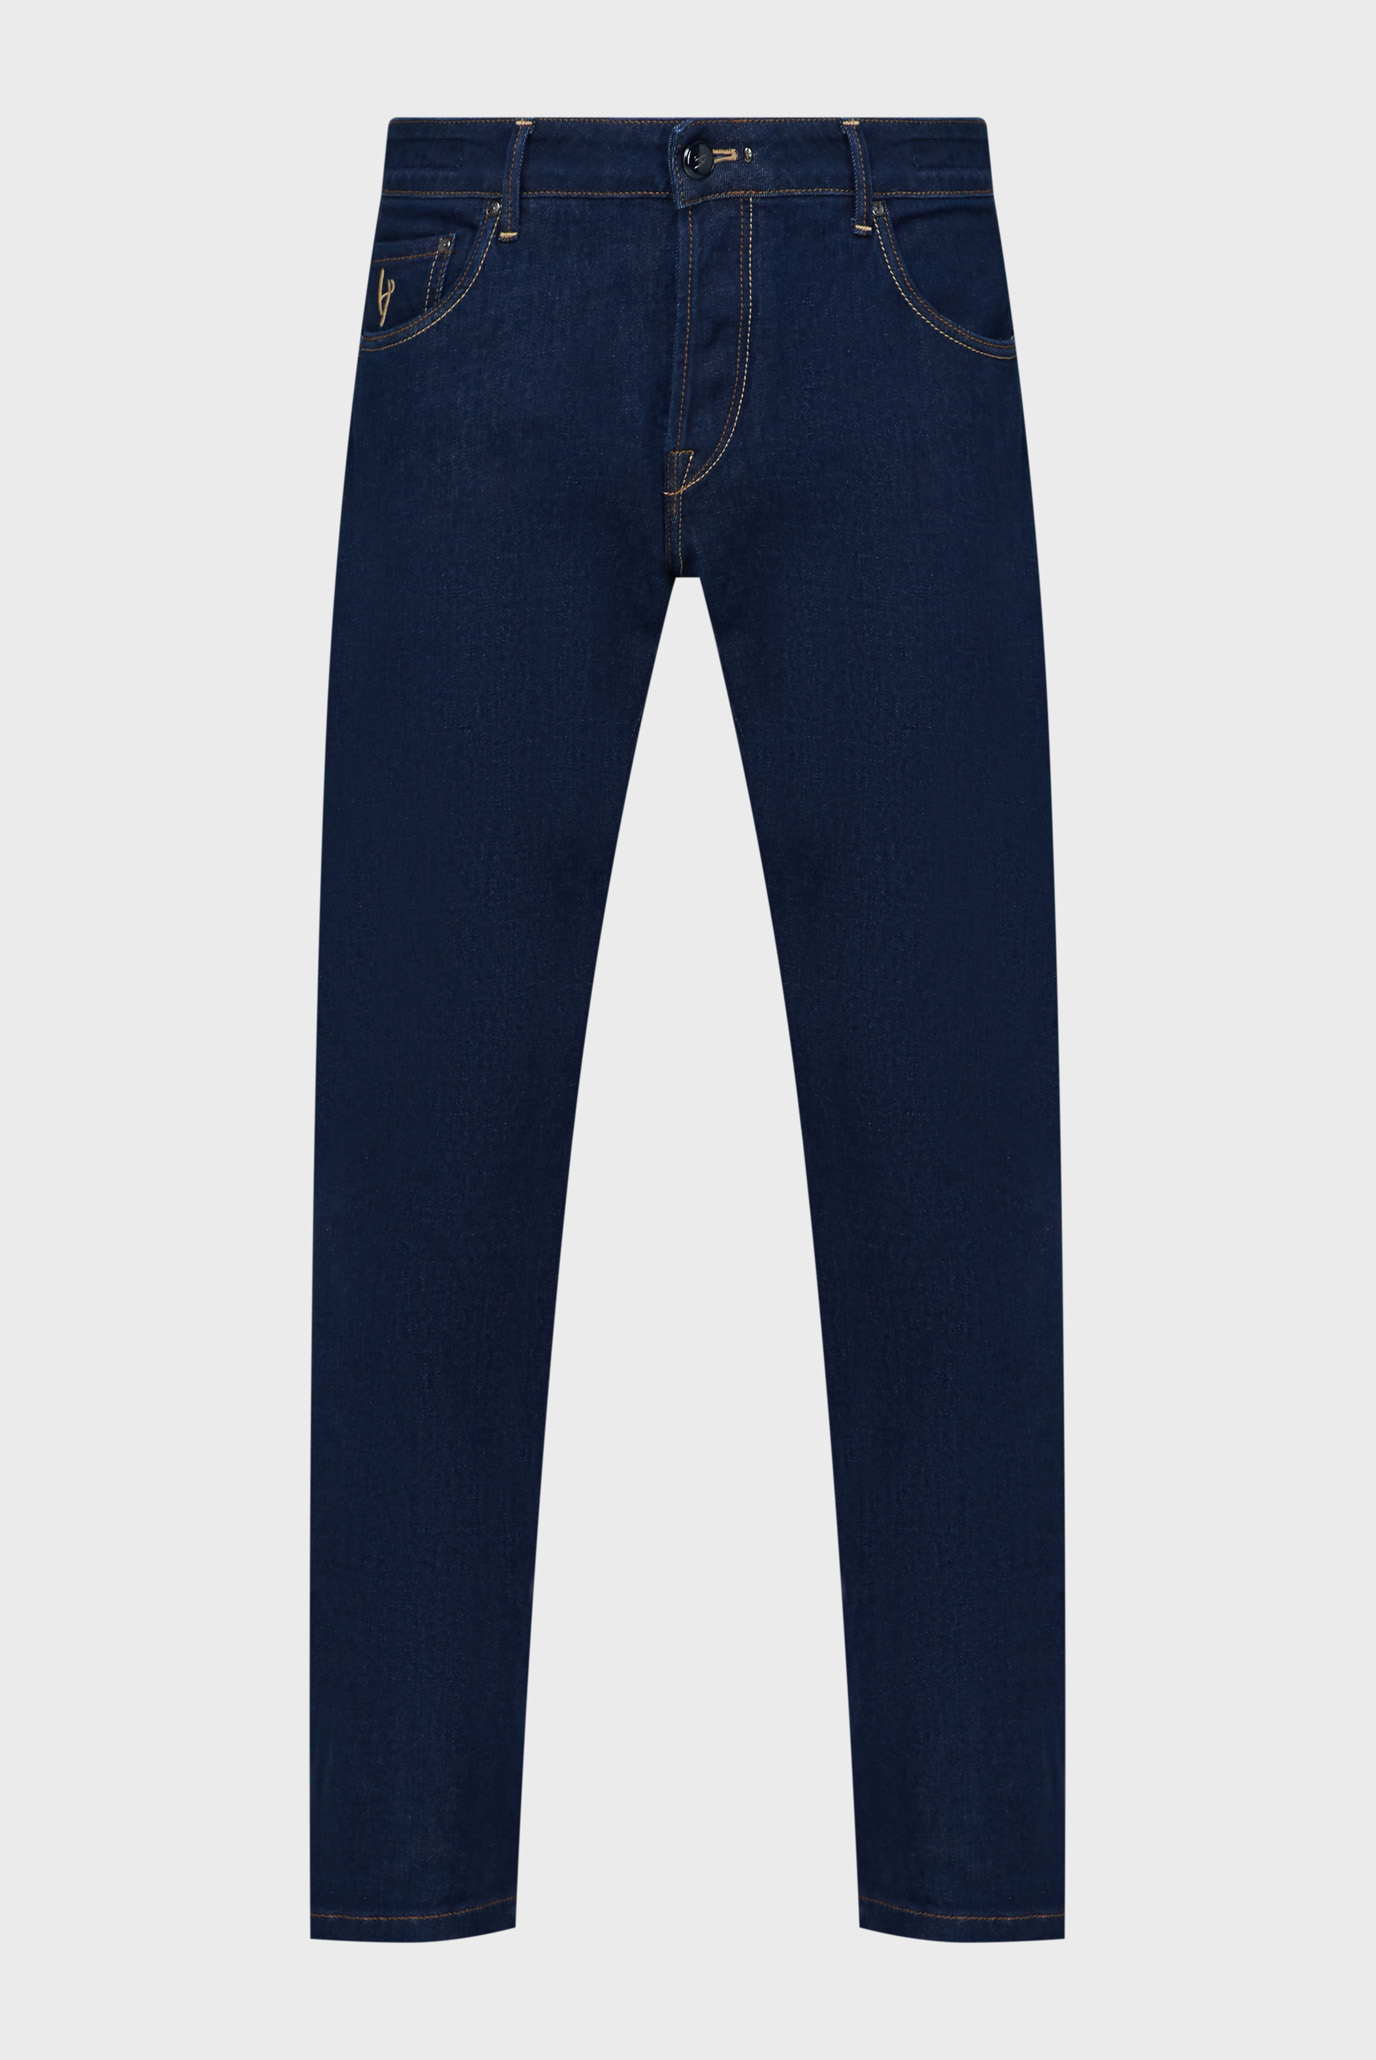 Мужские темно-синие джинсы 1